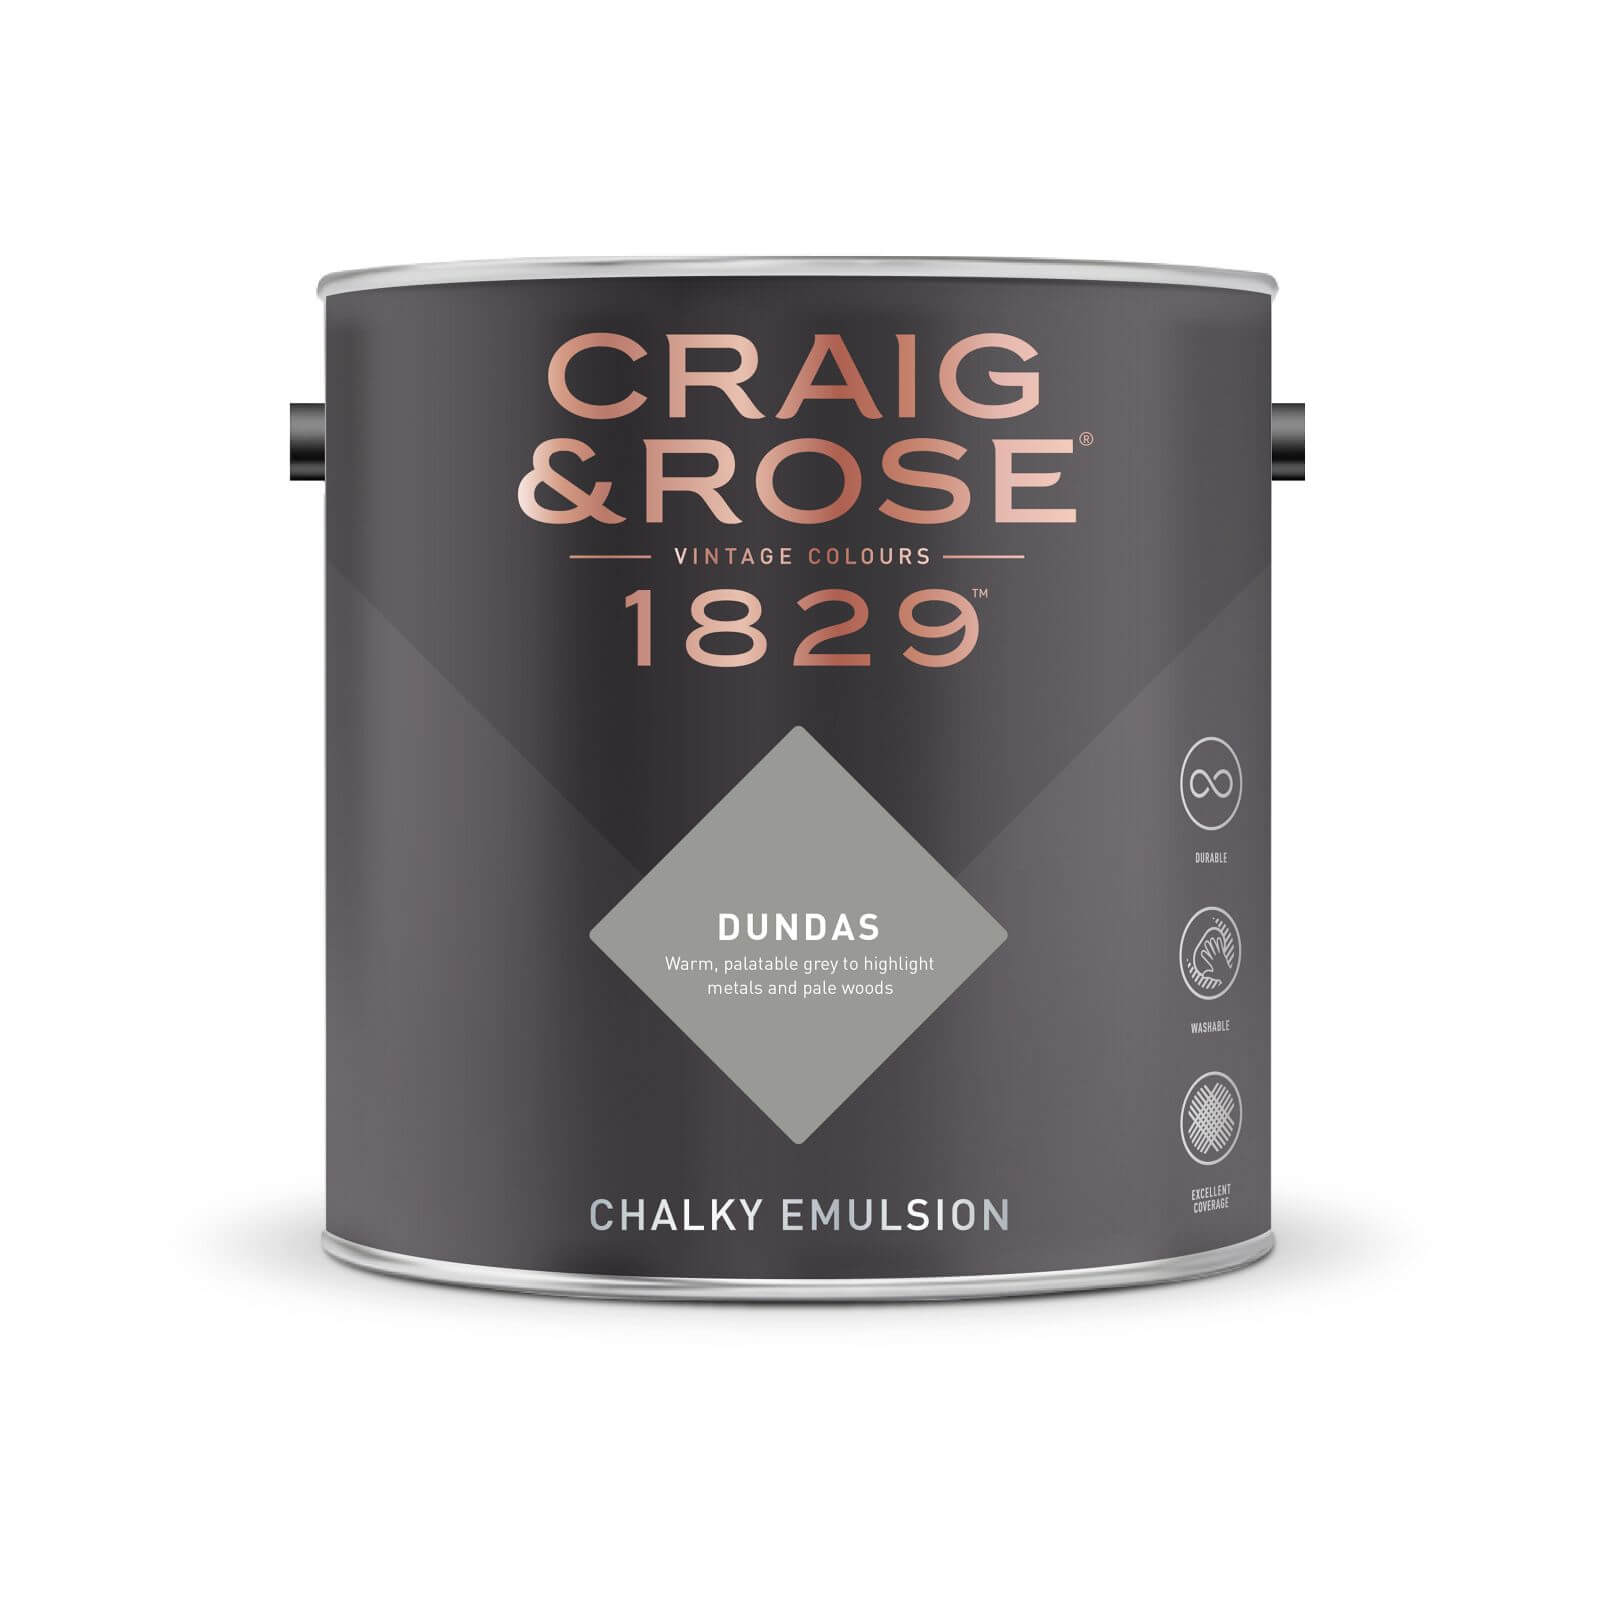 Craig & Rose 1829 Chalky Emulsion Paint Dundas - 5L